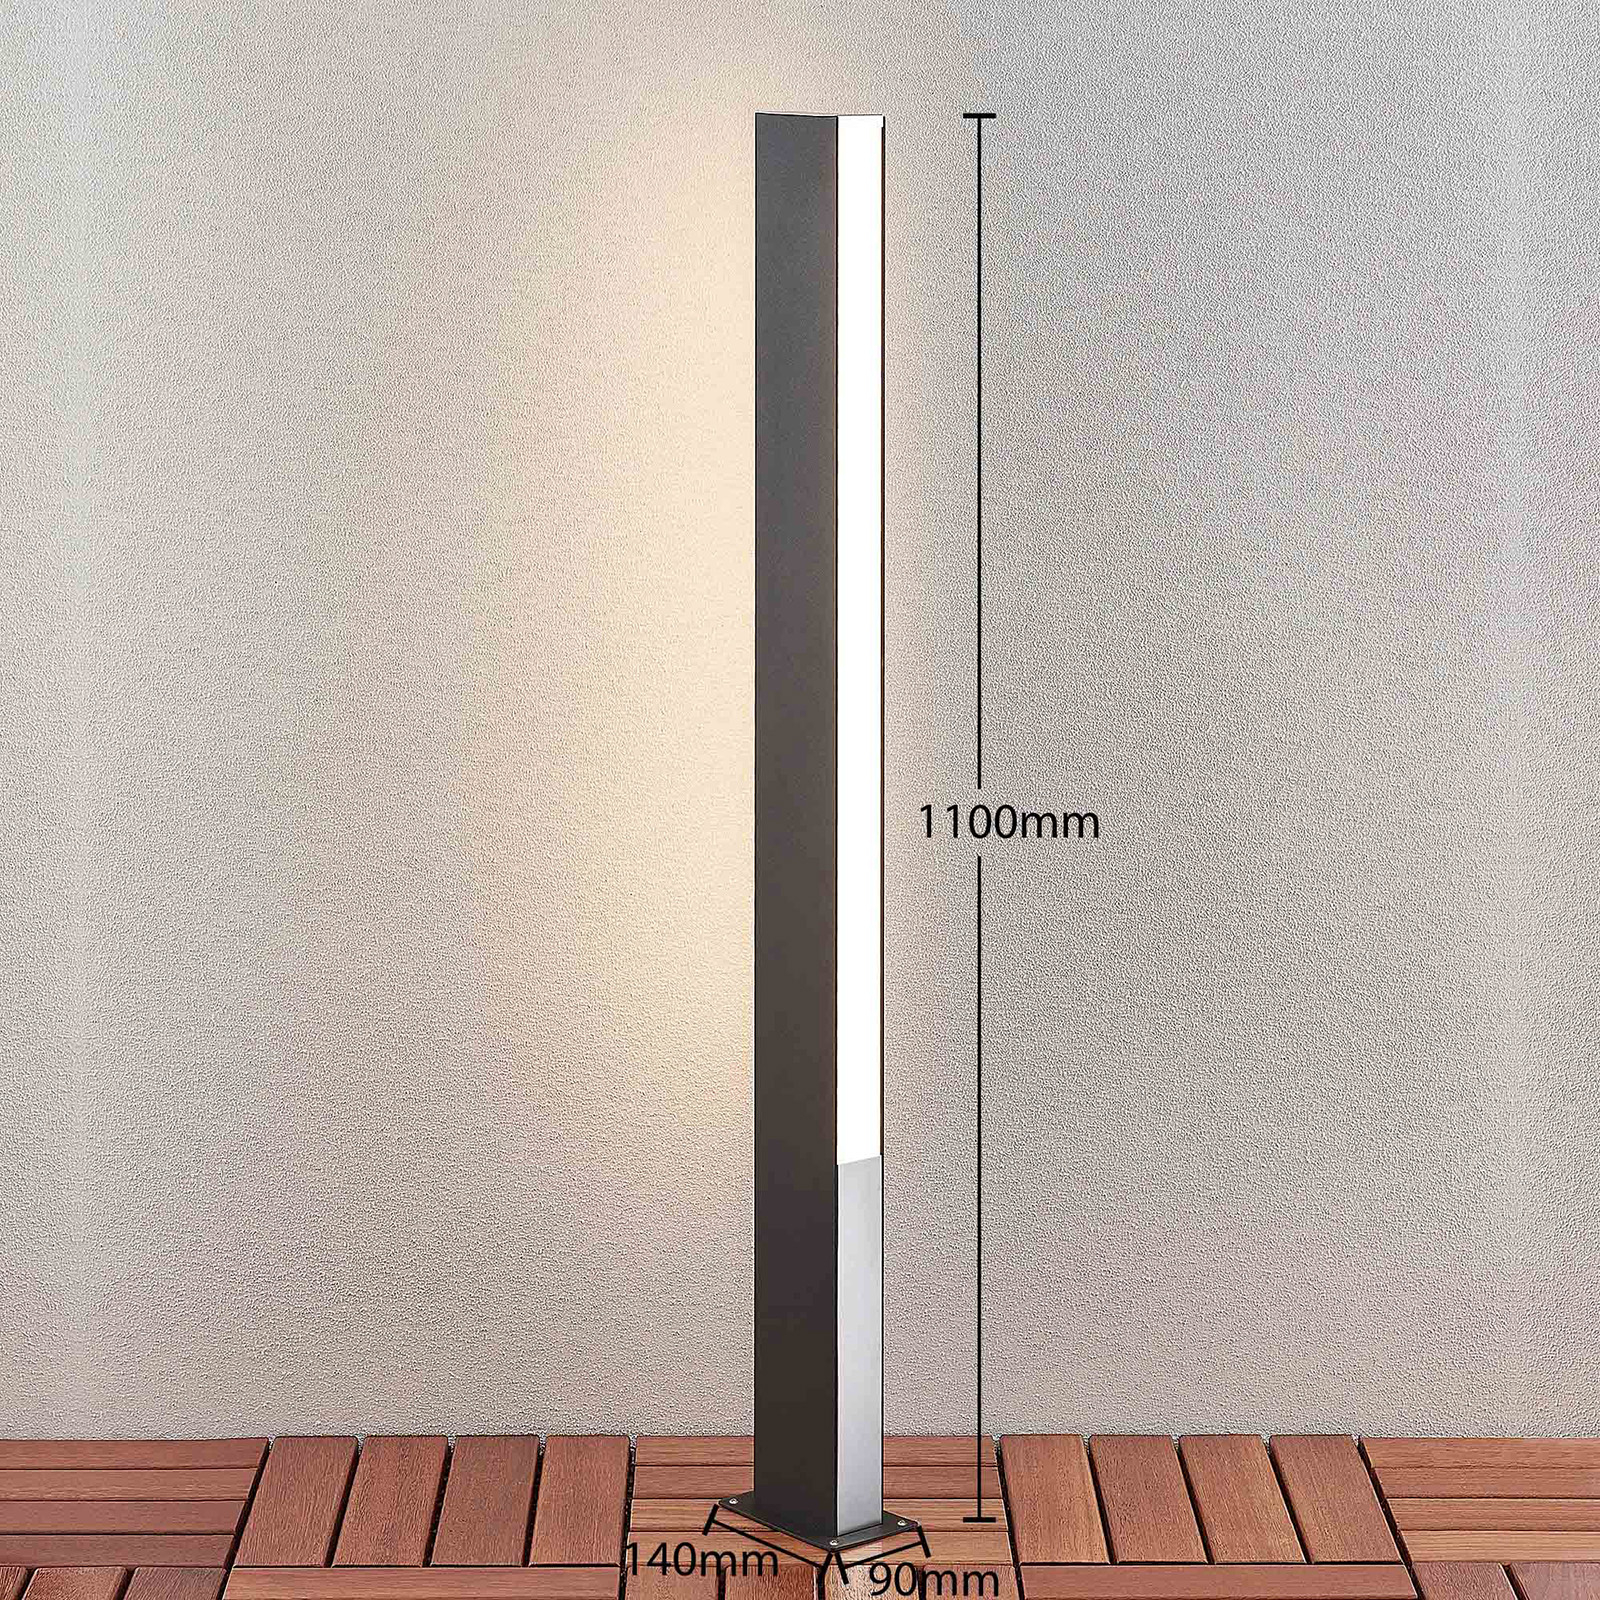 Lucande Aegisa LED-veilampe, 110 cm